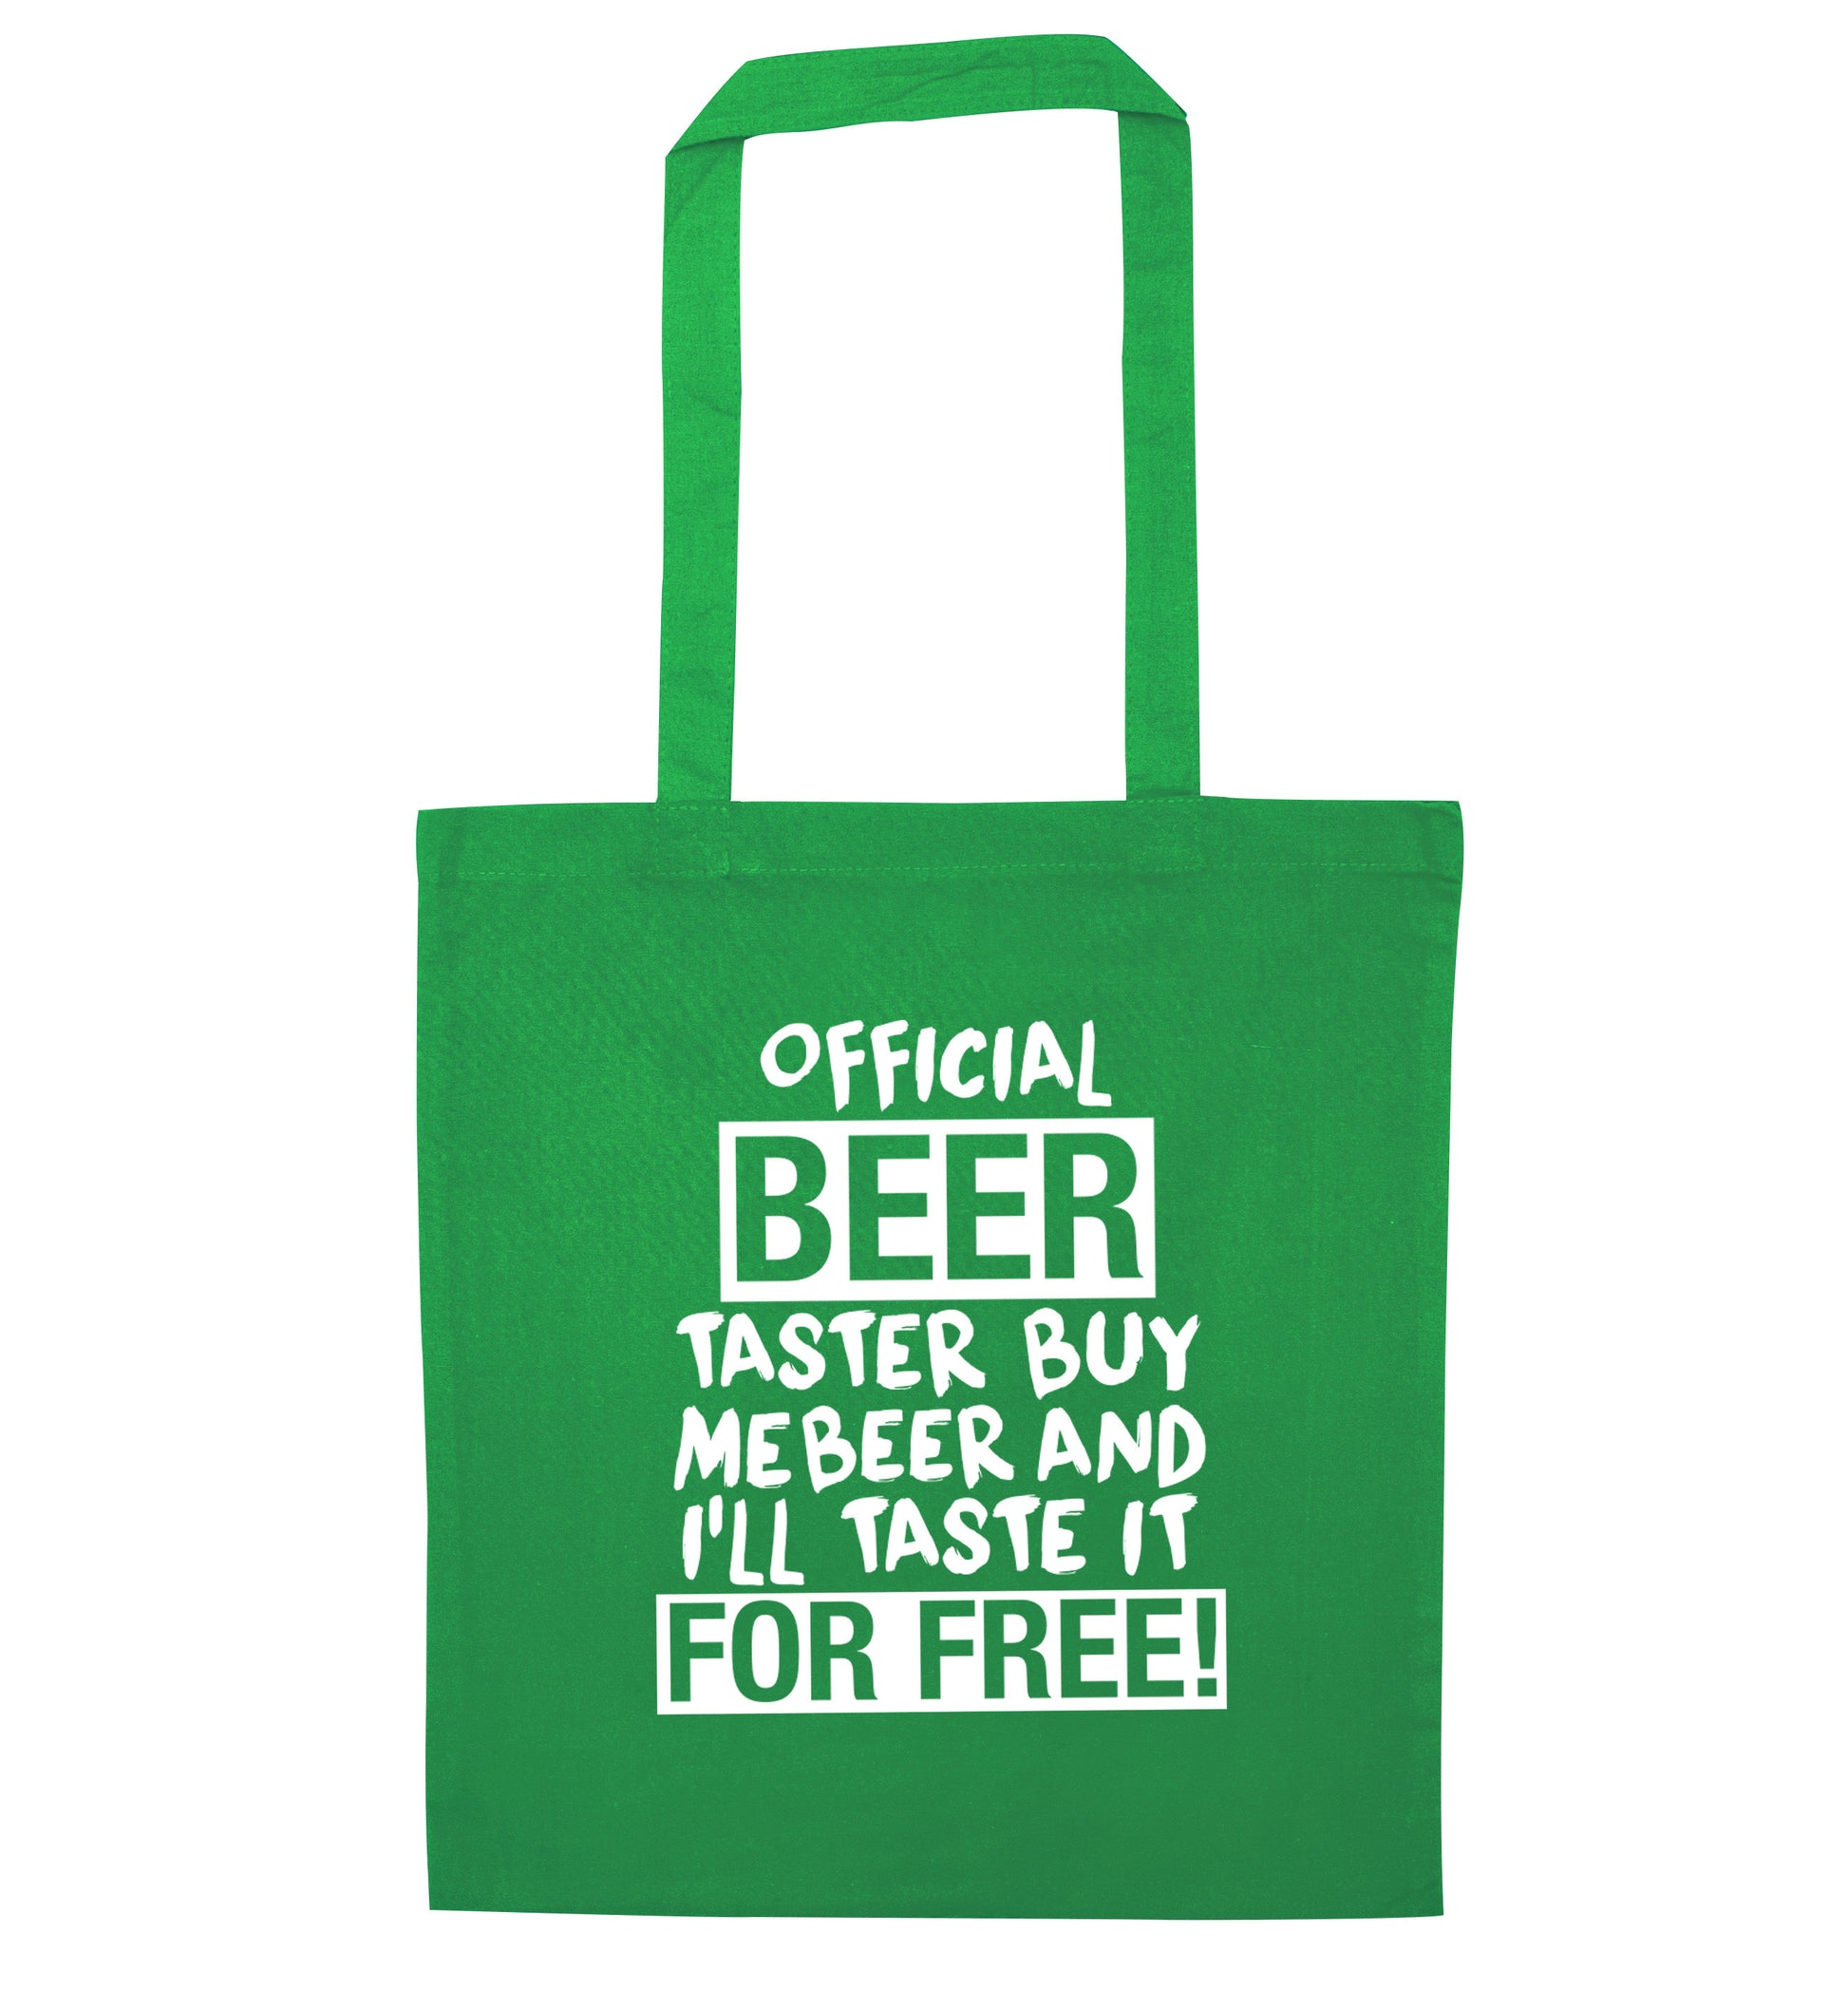 Official beer taster buy me beer and I'll taste it for free! green tote bag